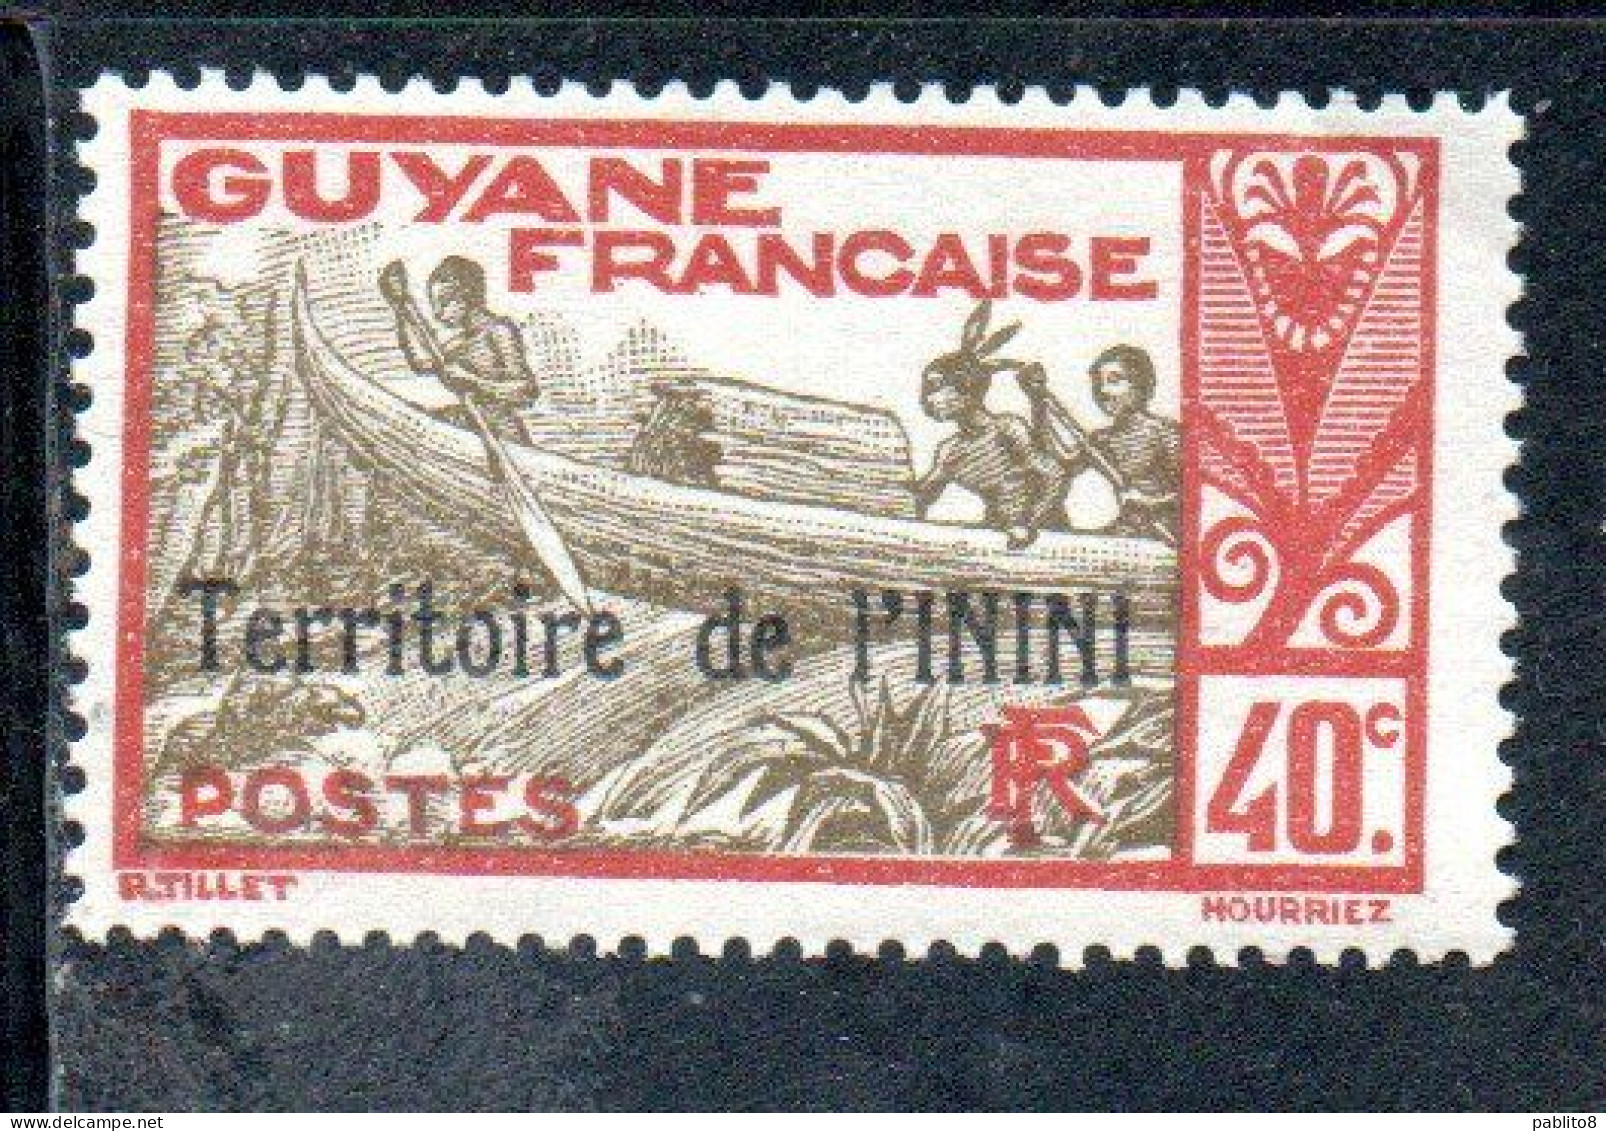 GUYANE FRANCAISE TERRITOIRE DE L'ININI OVERPRINTED SURCHARGE 1932 1940 SHOOTING RAPIDS MARONI RIVER 40c MNH - Nuevos